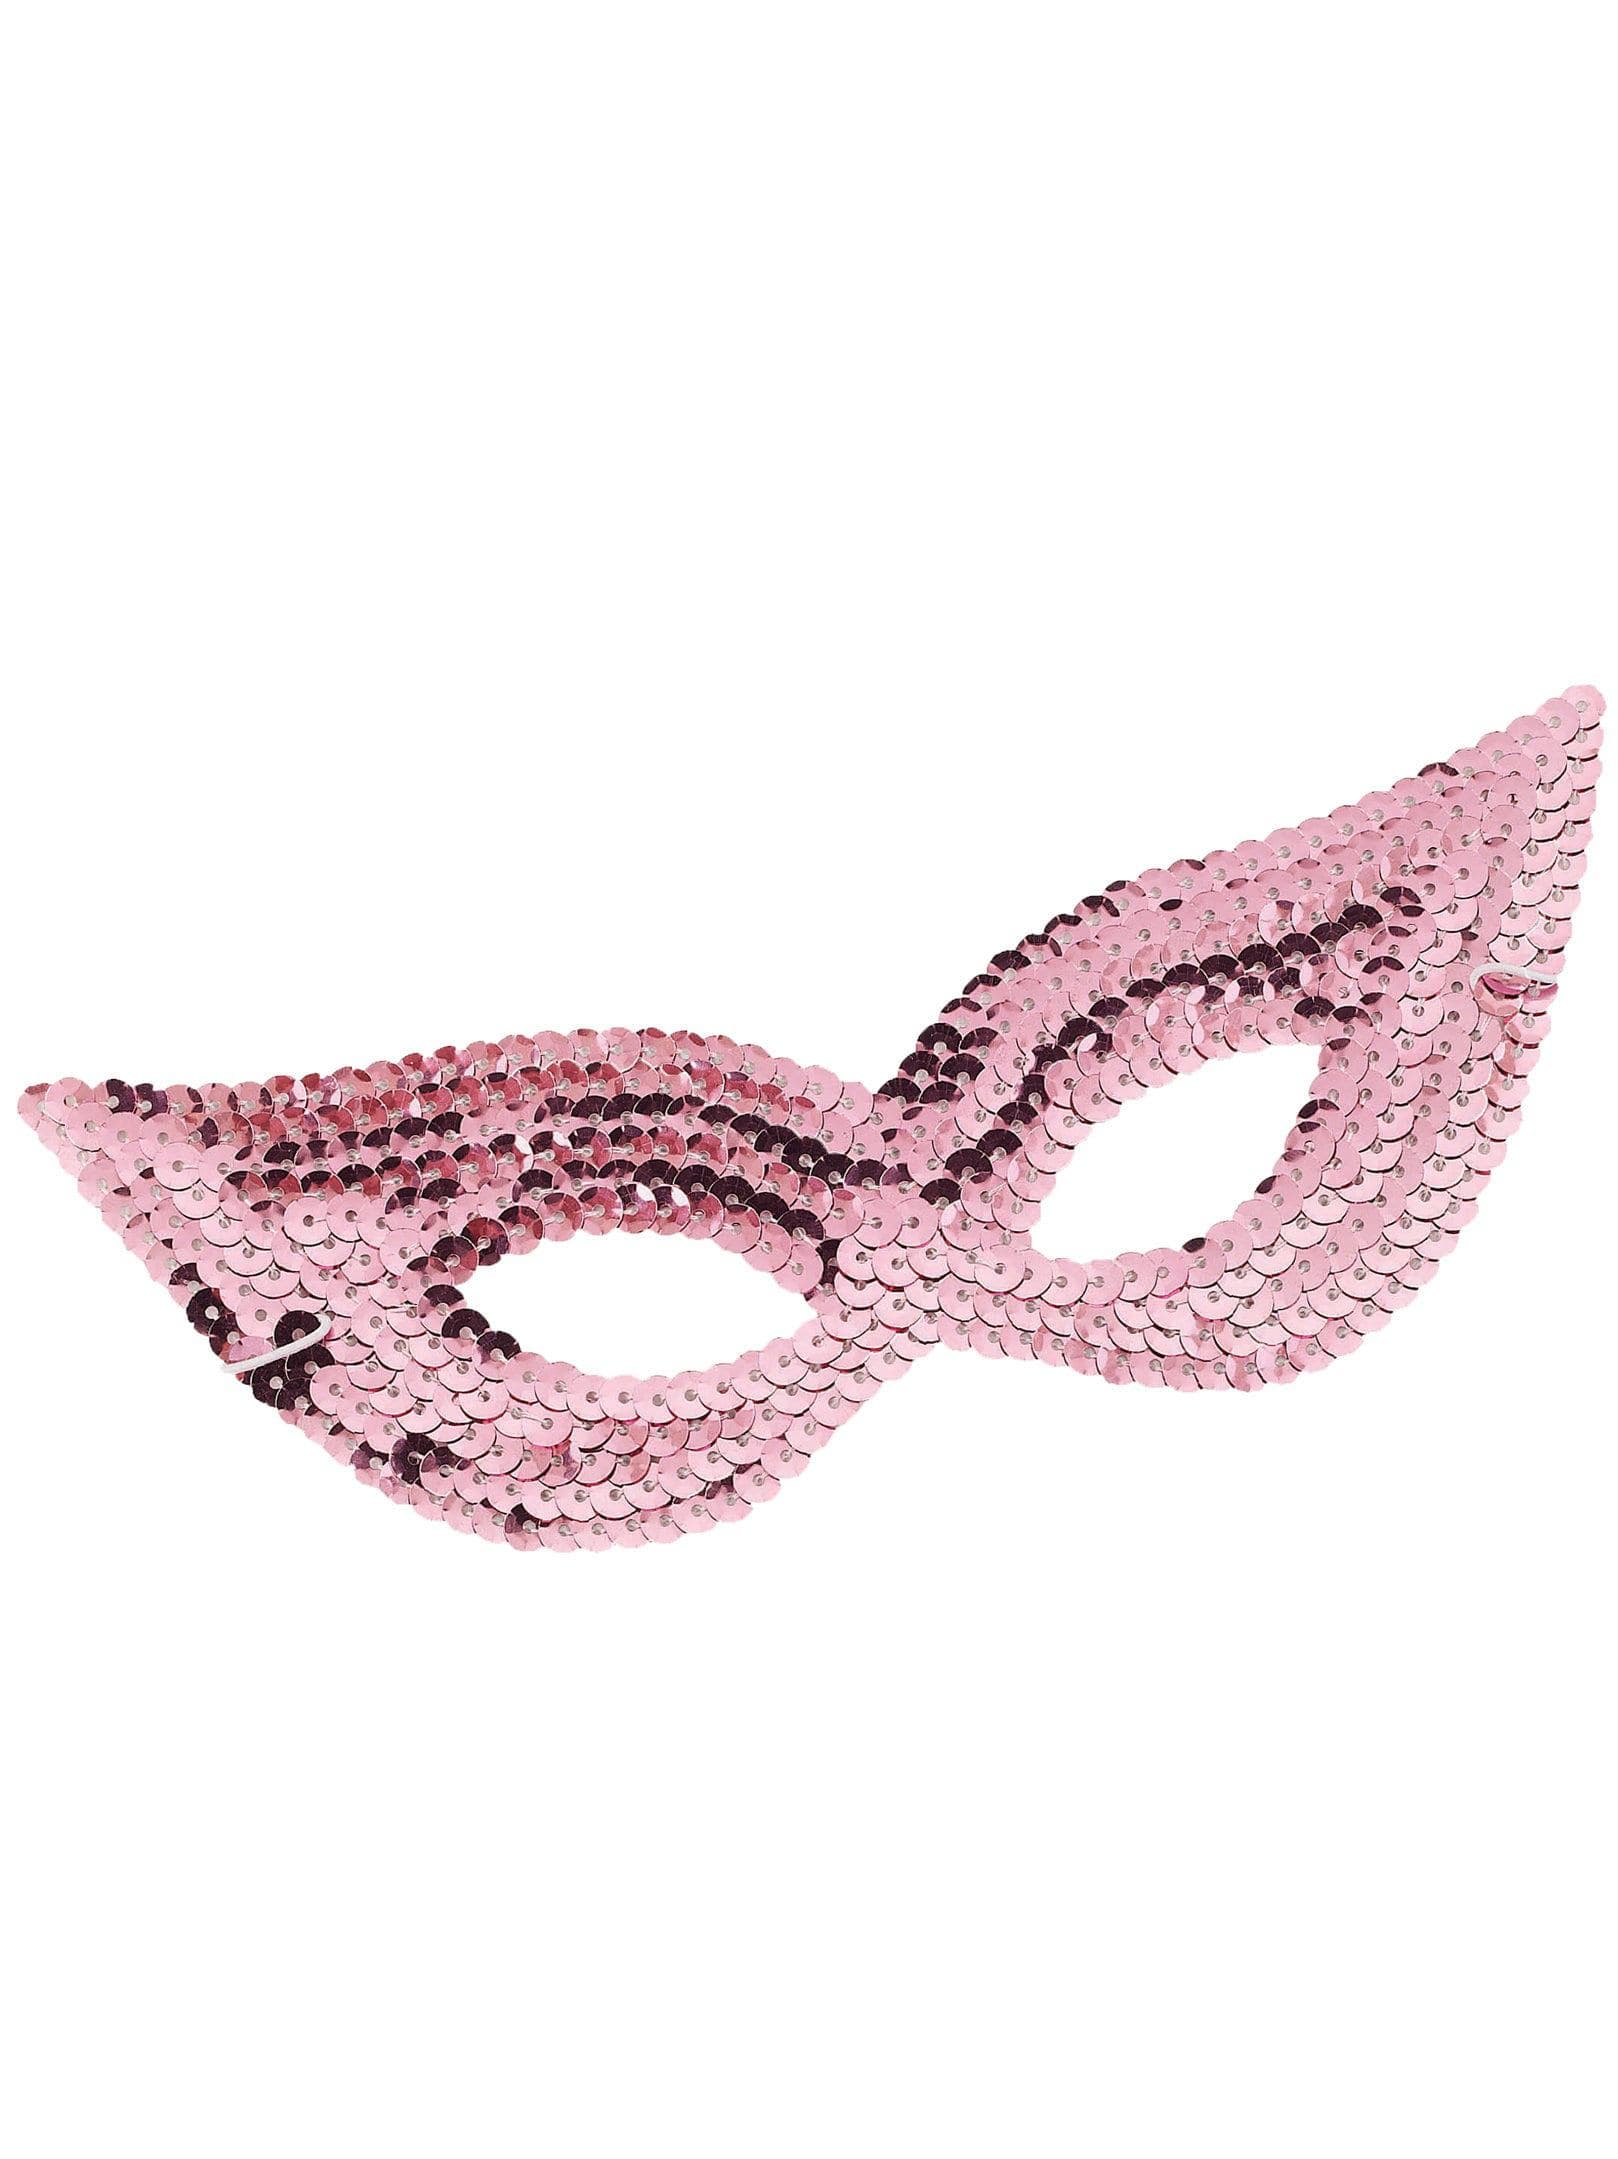 Sequin Eye Mask - Pink - costumes.com